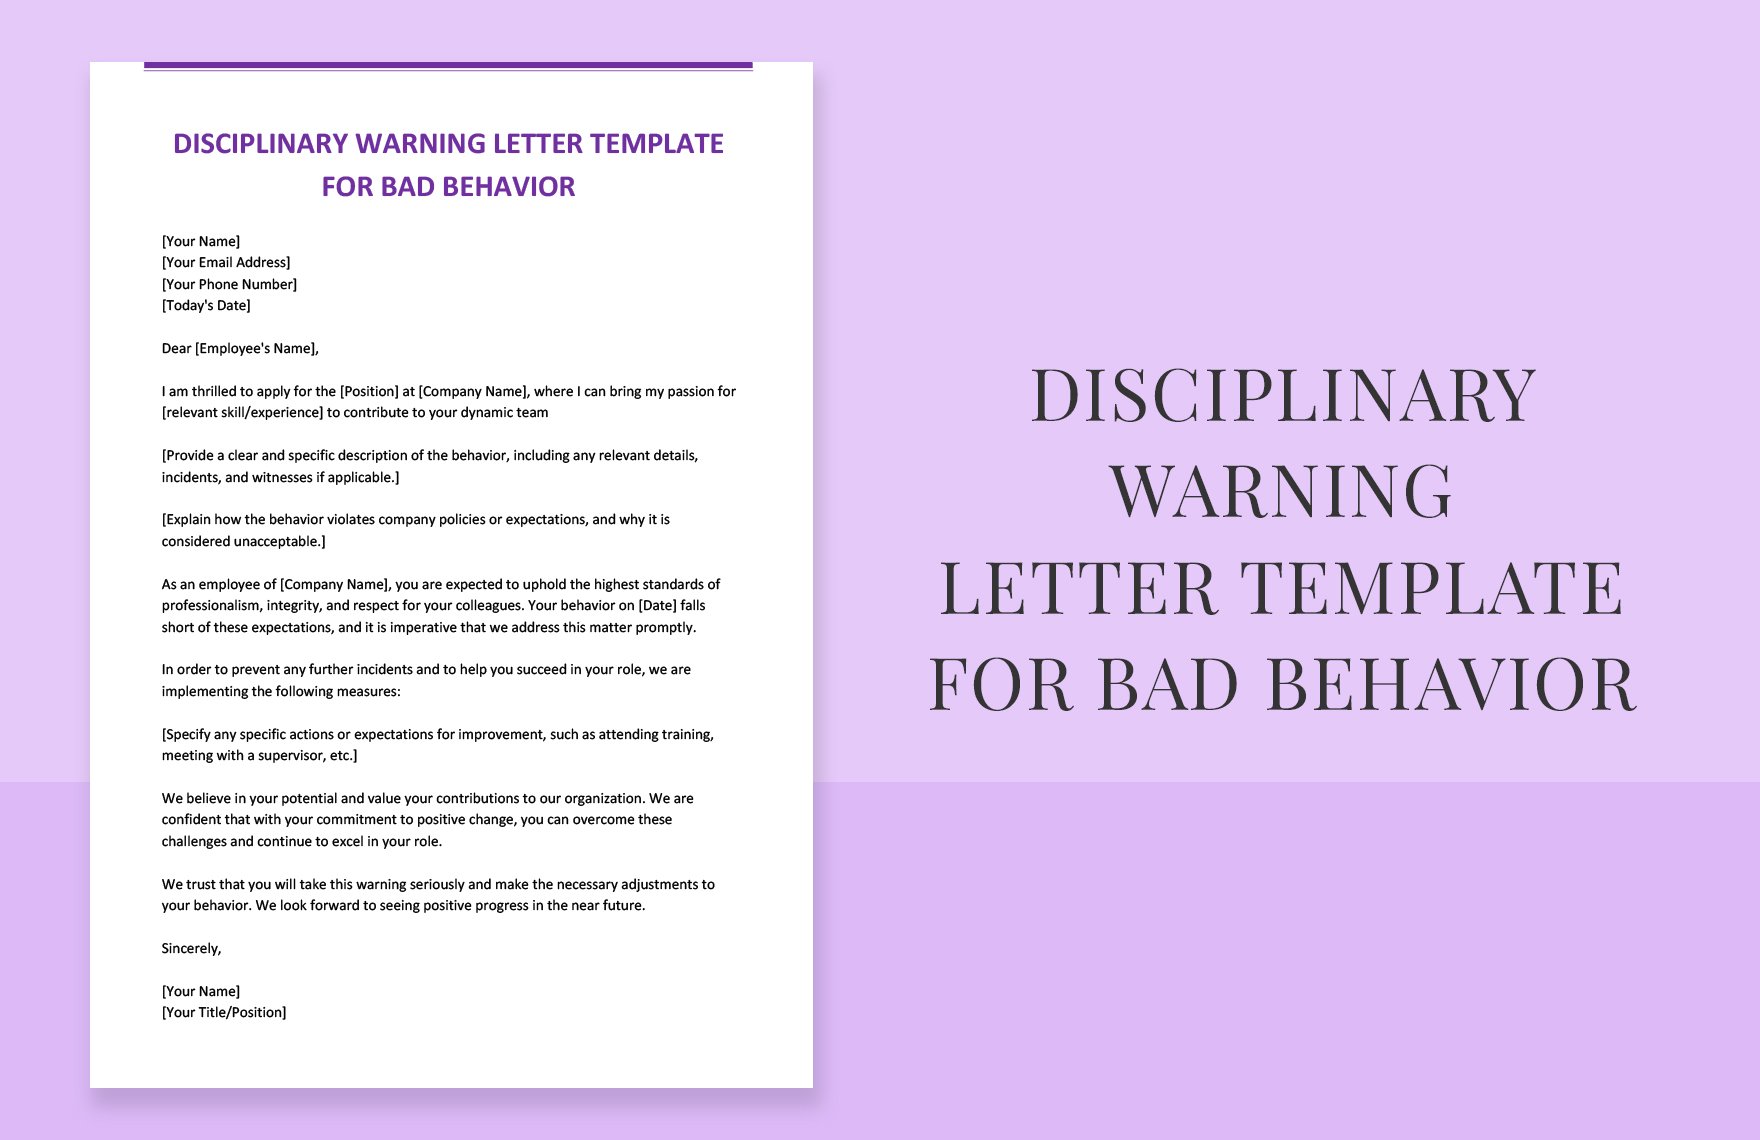 Free Disciplinary Warning Letter Template for Bad Behavior